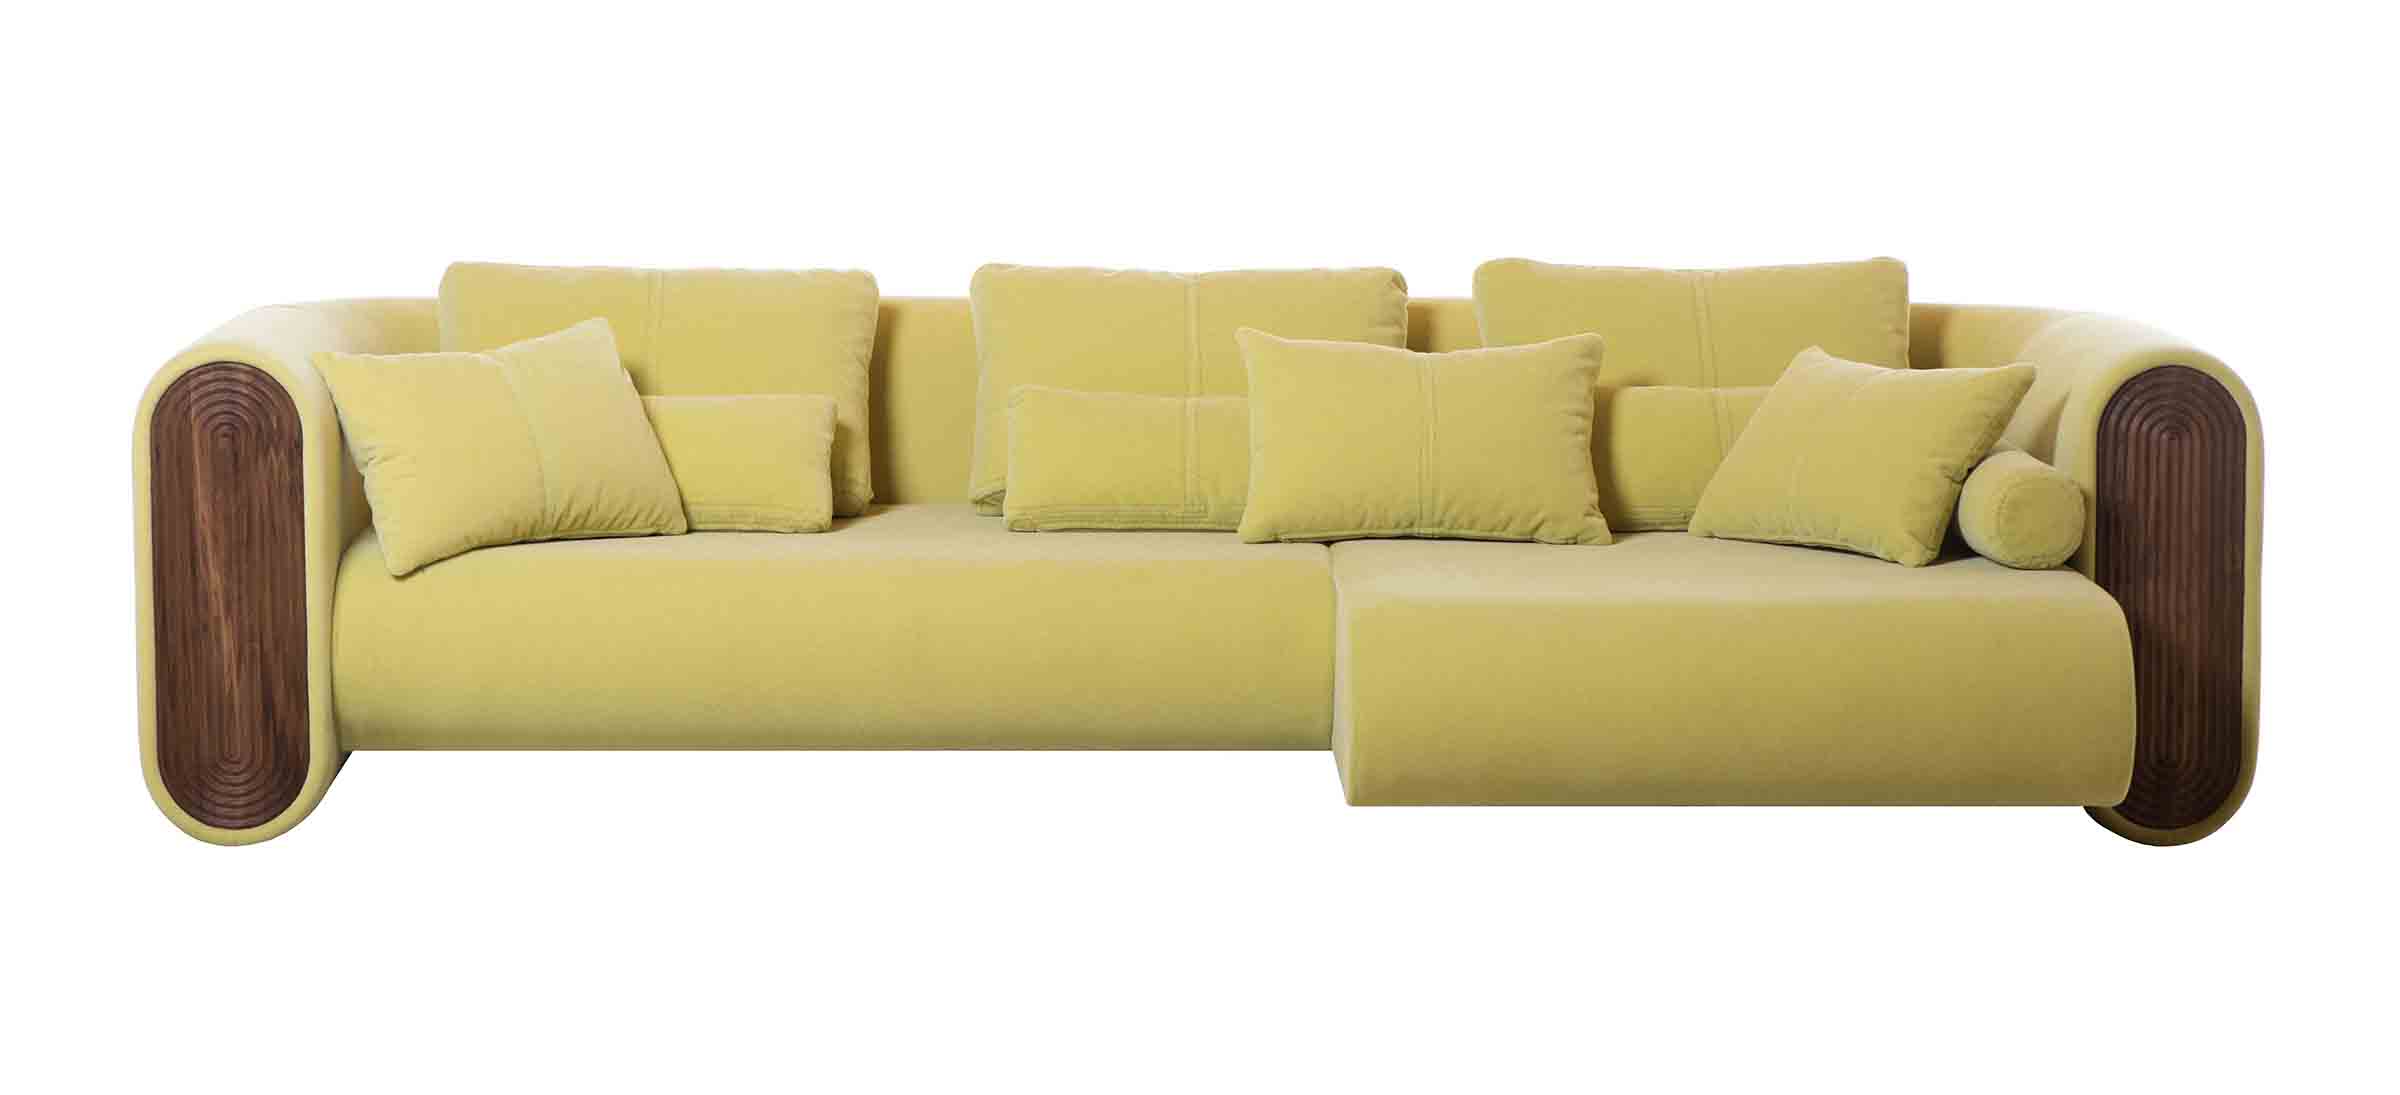 ‘Union’ sofa, designed by Autoban for De La Espada